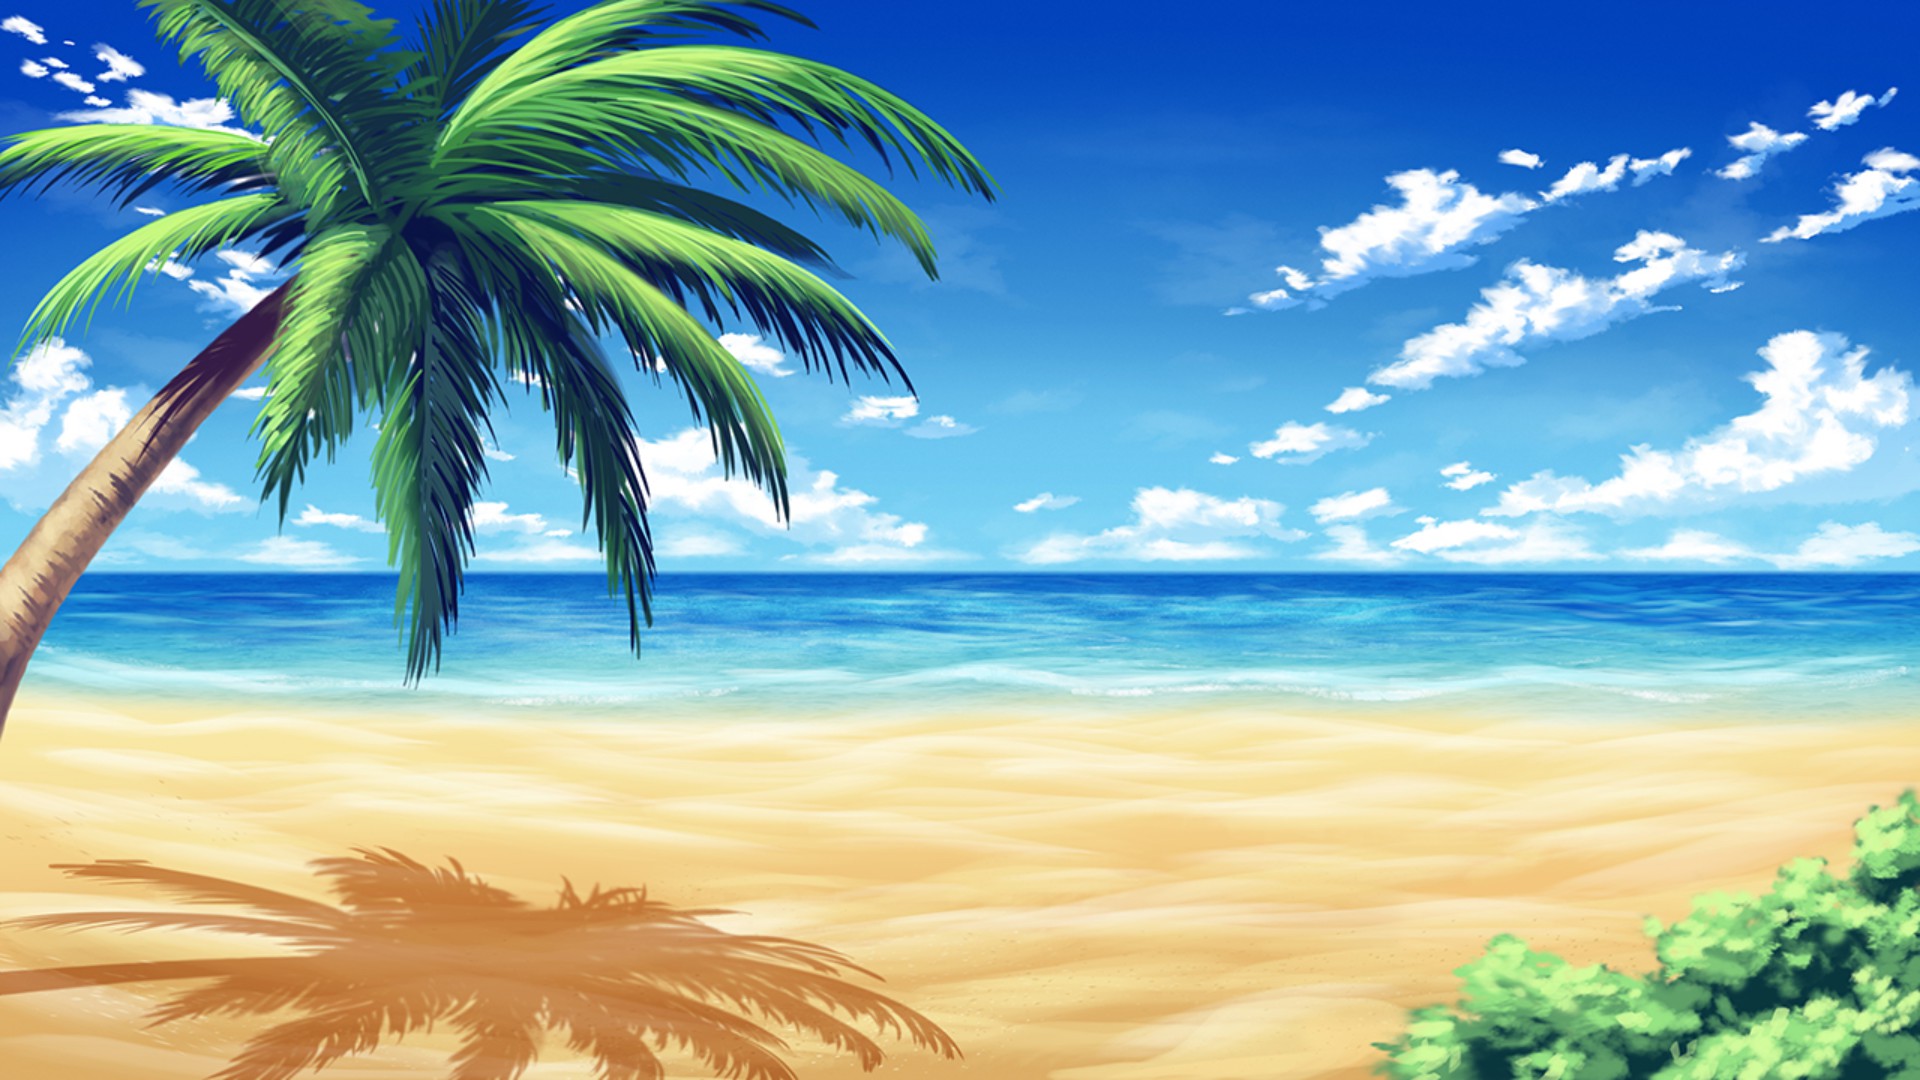 Sakura Beach Backgrounds.